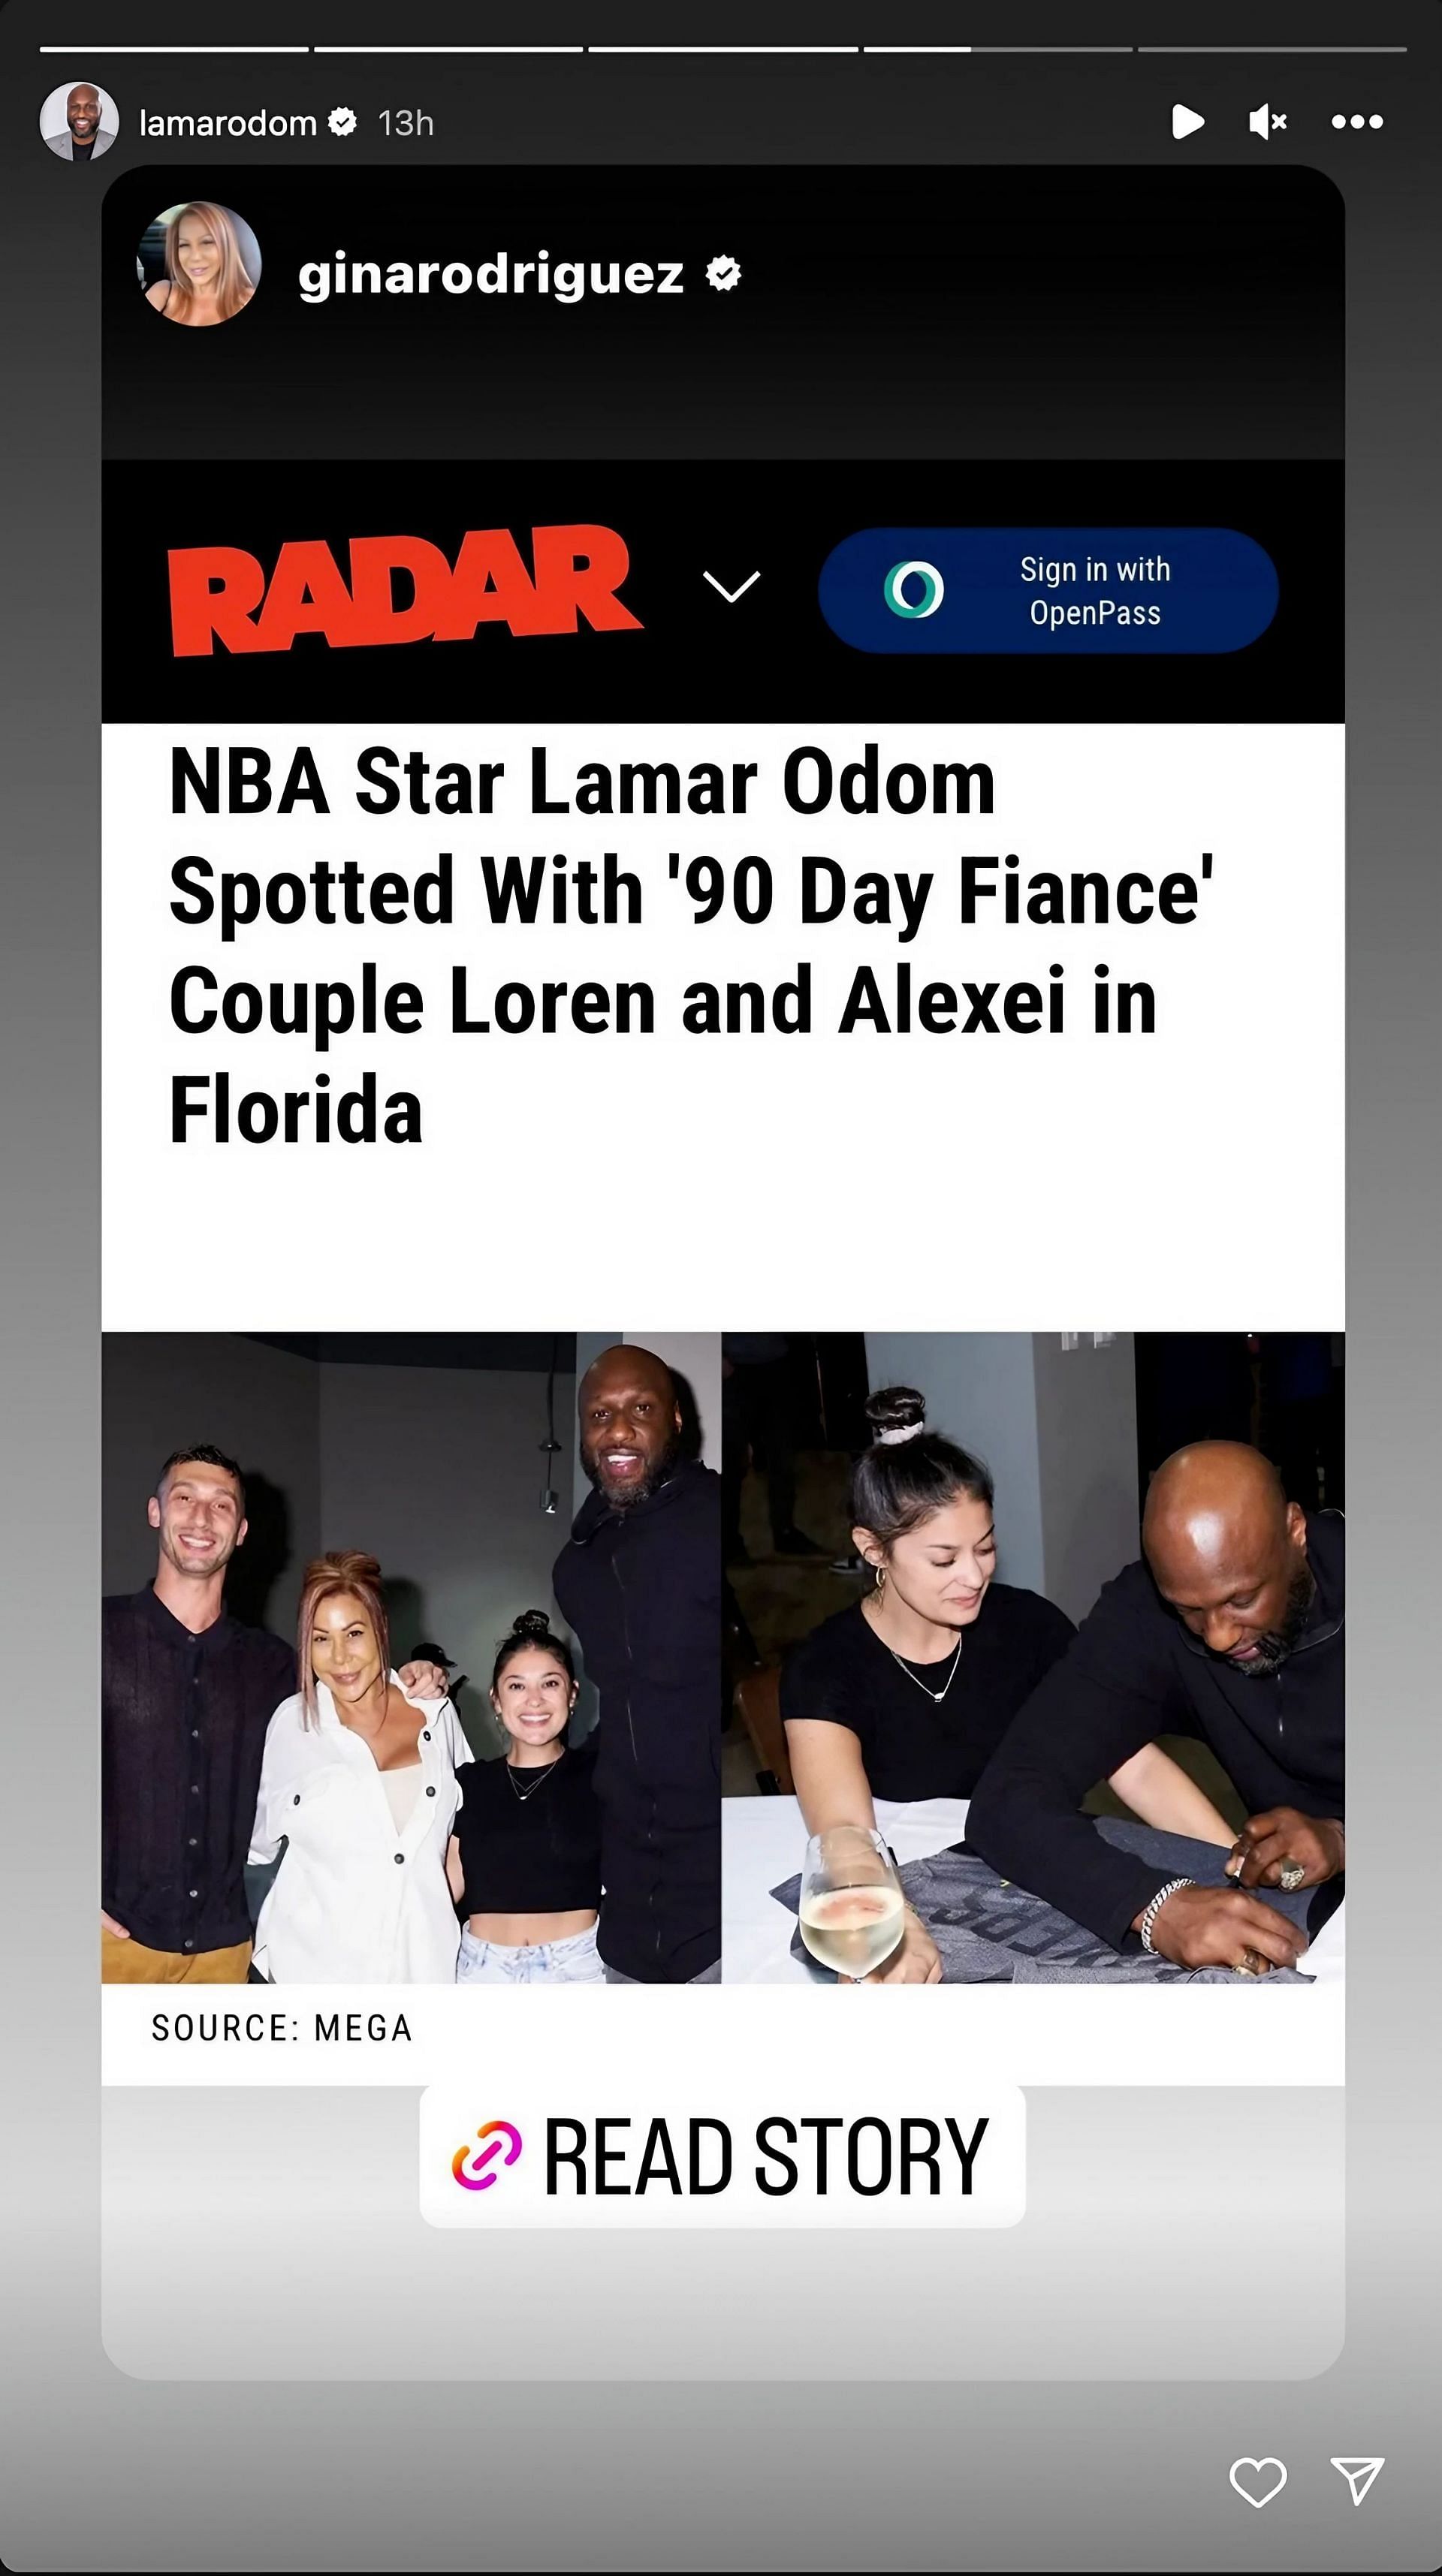 Lamar Odom reposted the Radar article through his Instagram (Image source: Instagram @lamarodom)